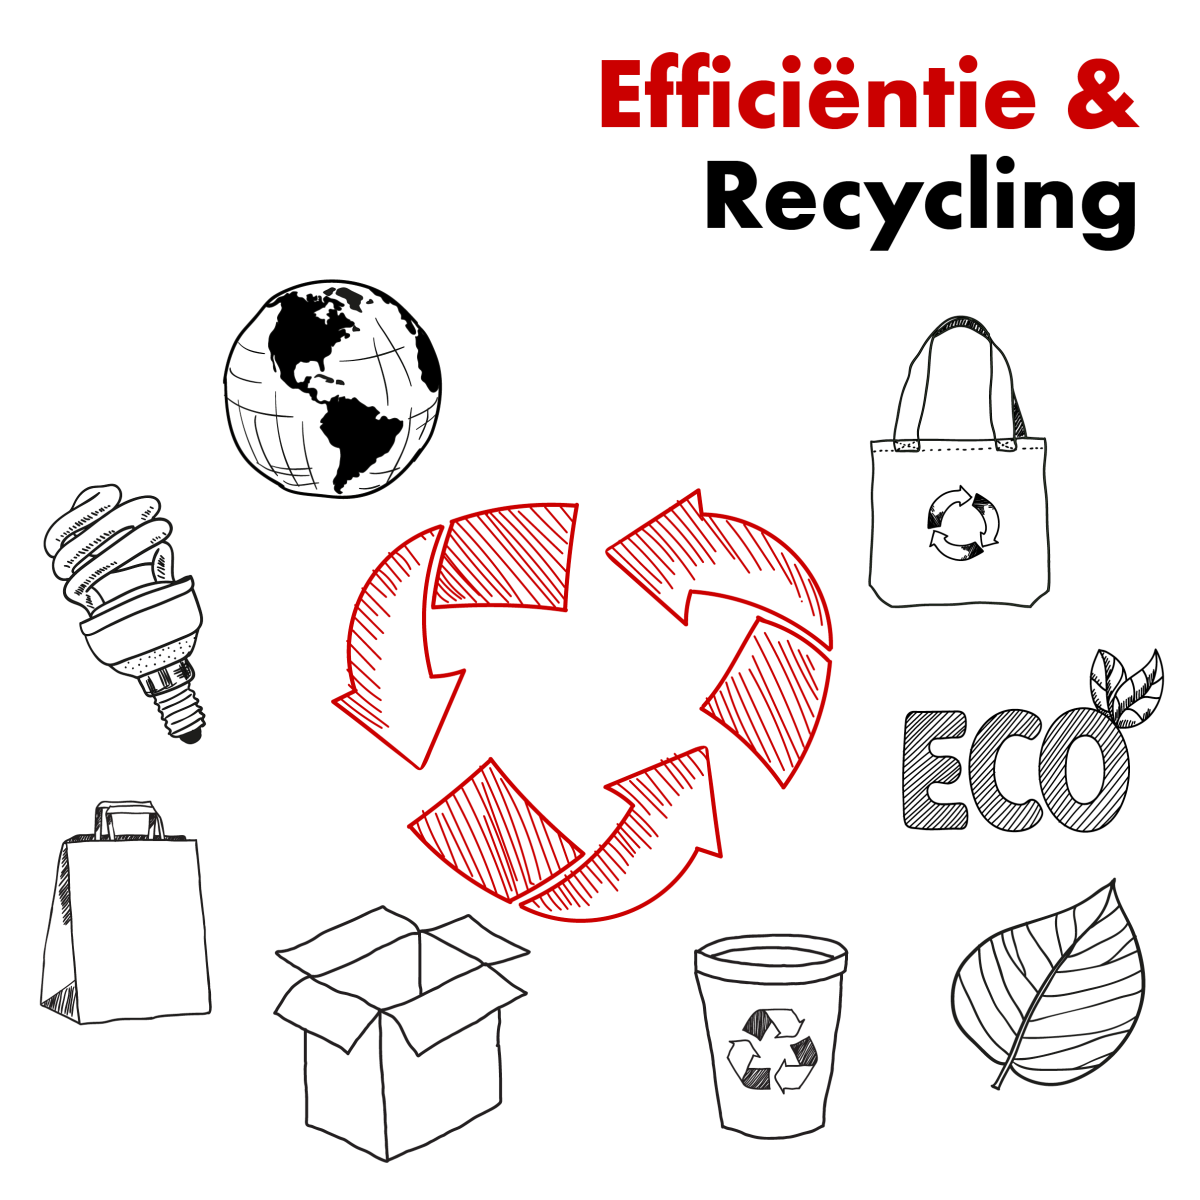 Efficienty & recycling